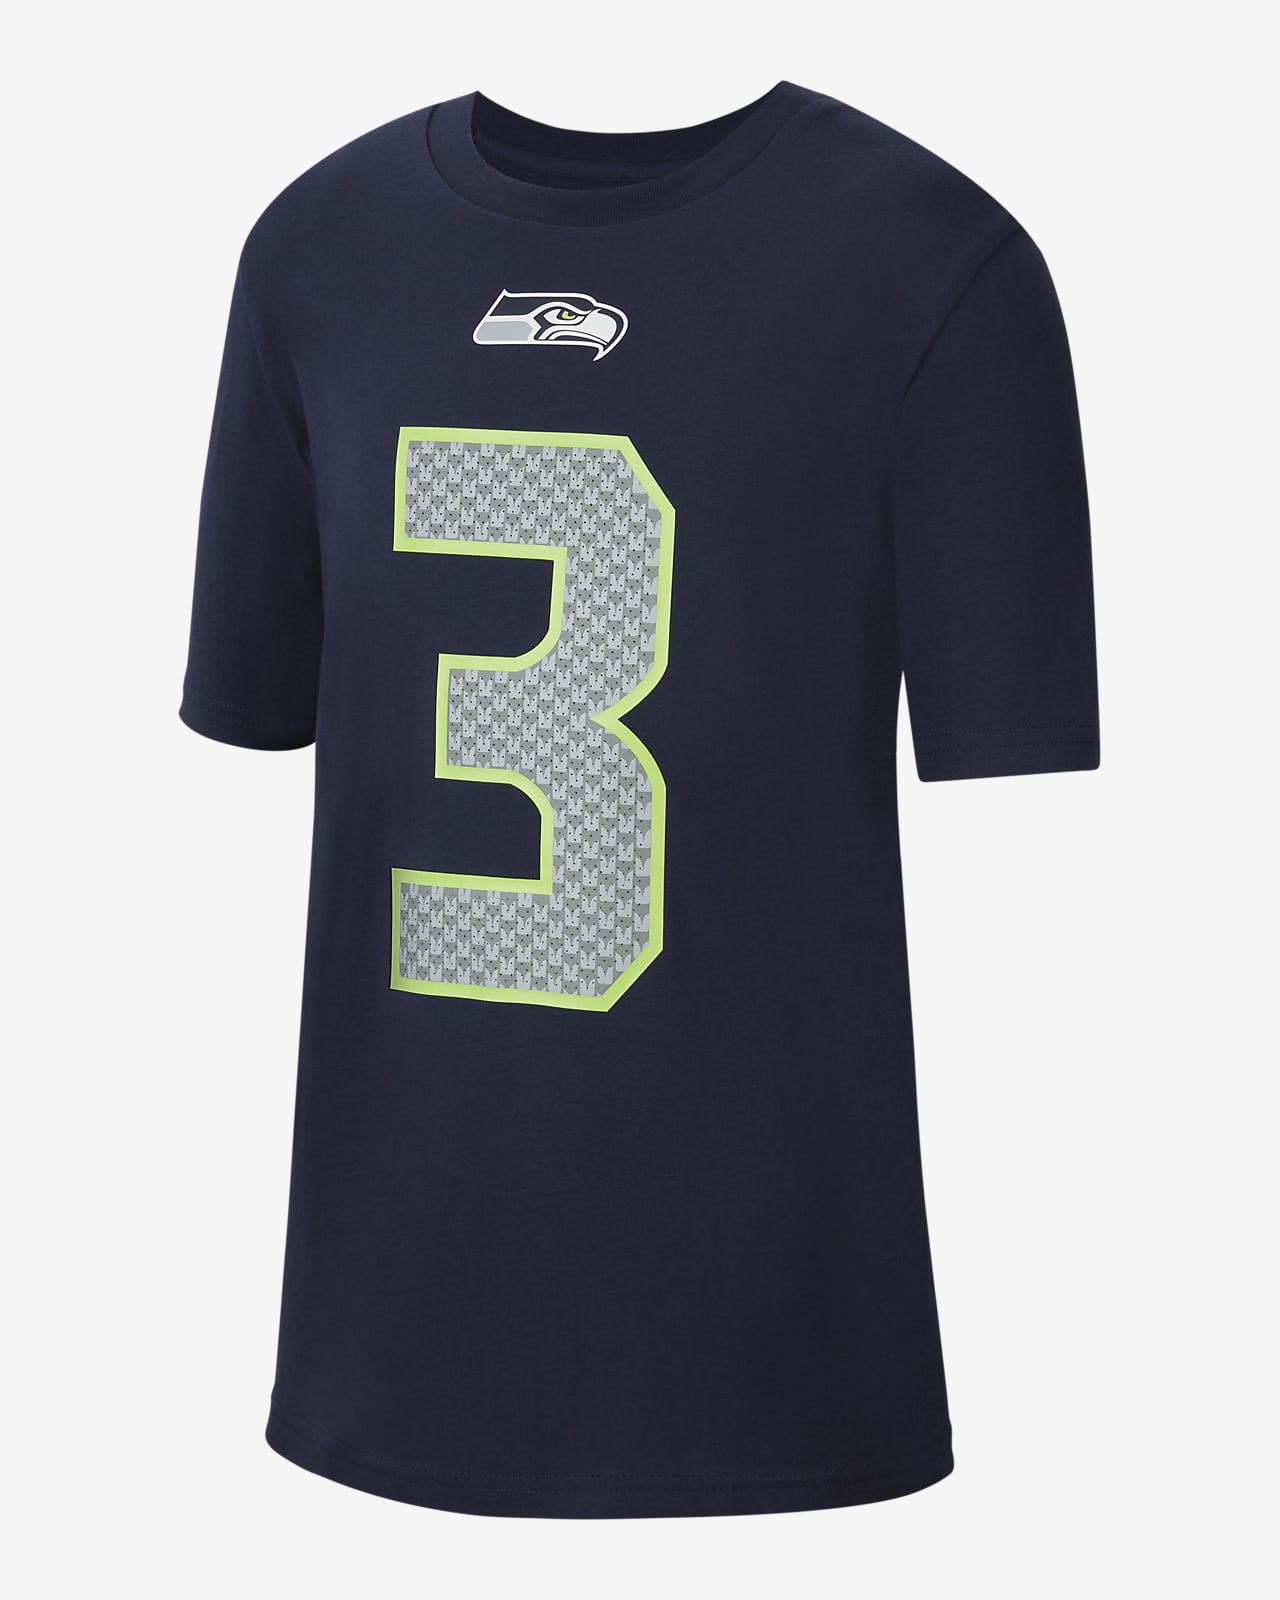 T-shirt Nike (NFL Seattle Seahawks) pour ado